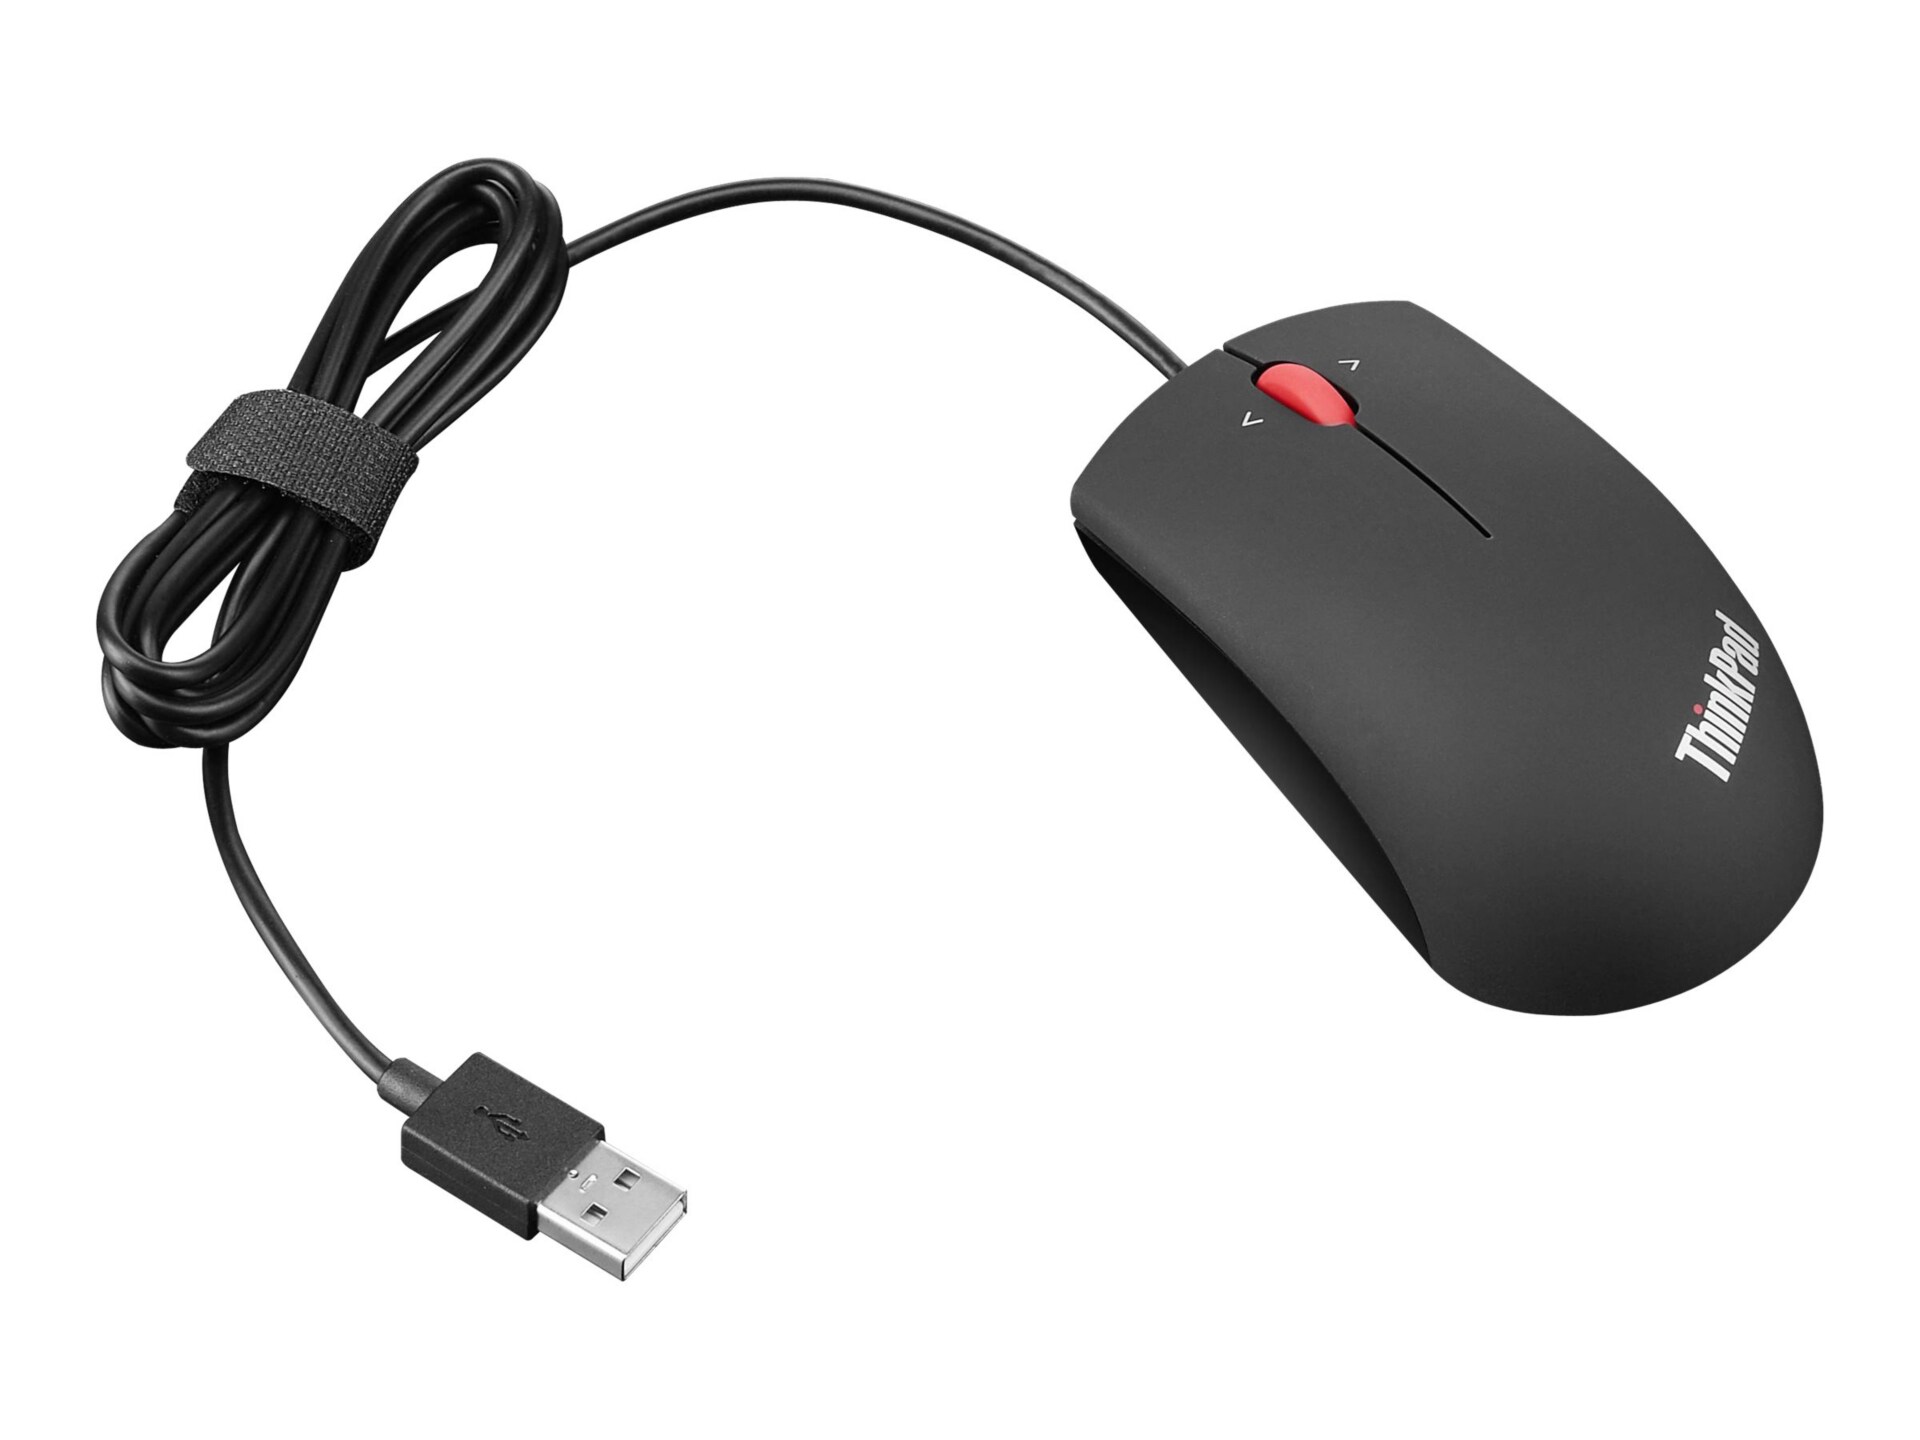 Lenovo ThinkPad Precision USB Mouse - mouse - USB - midnight black